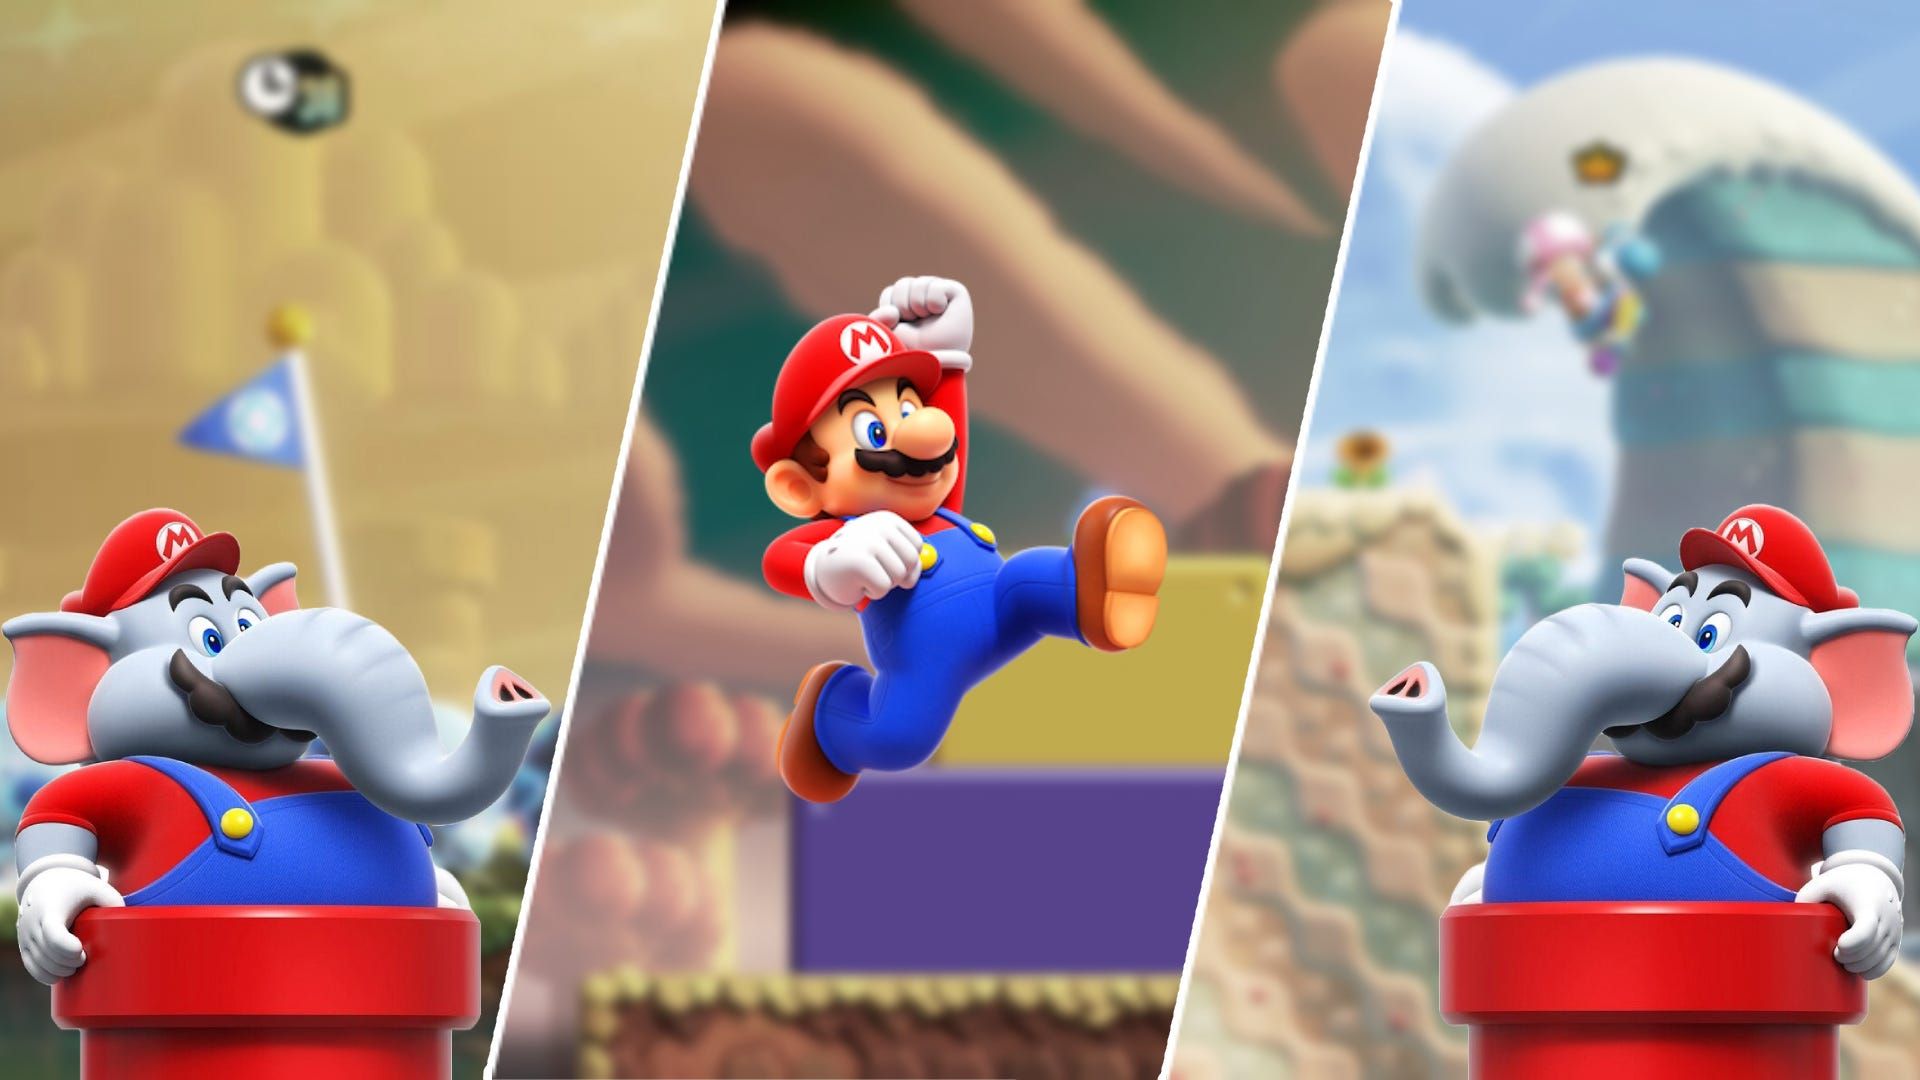 Mario in Super Mario 3D World, with the same art style as the upcoming Mario movie - Super Mario